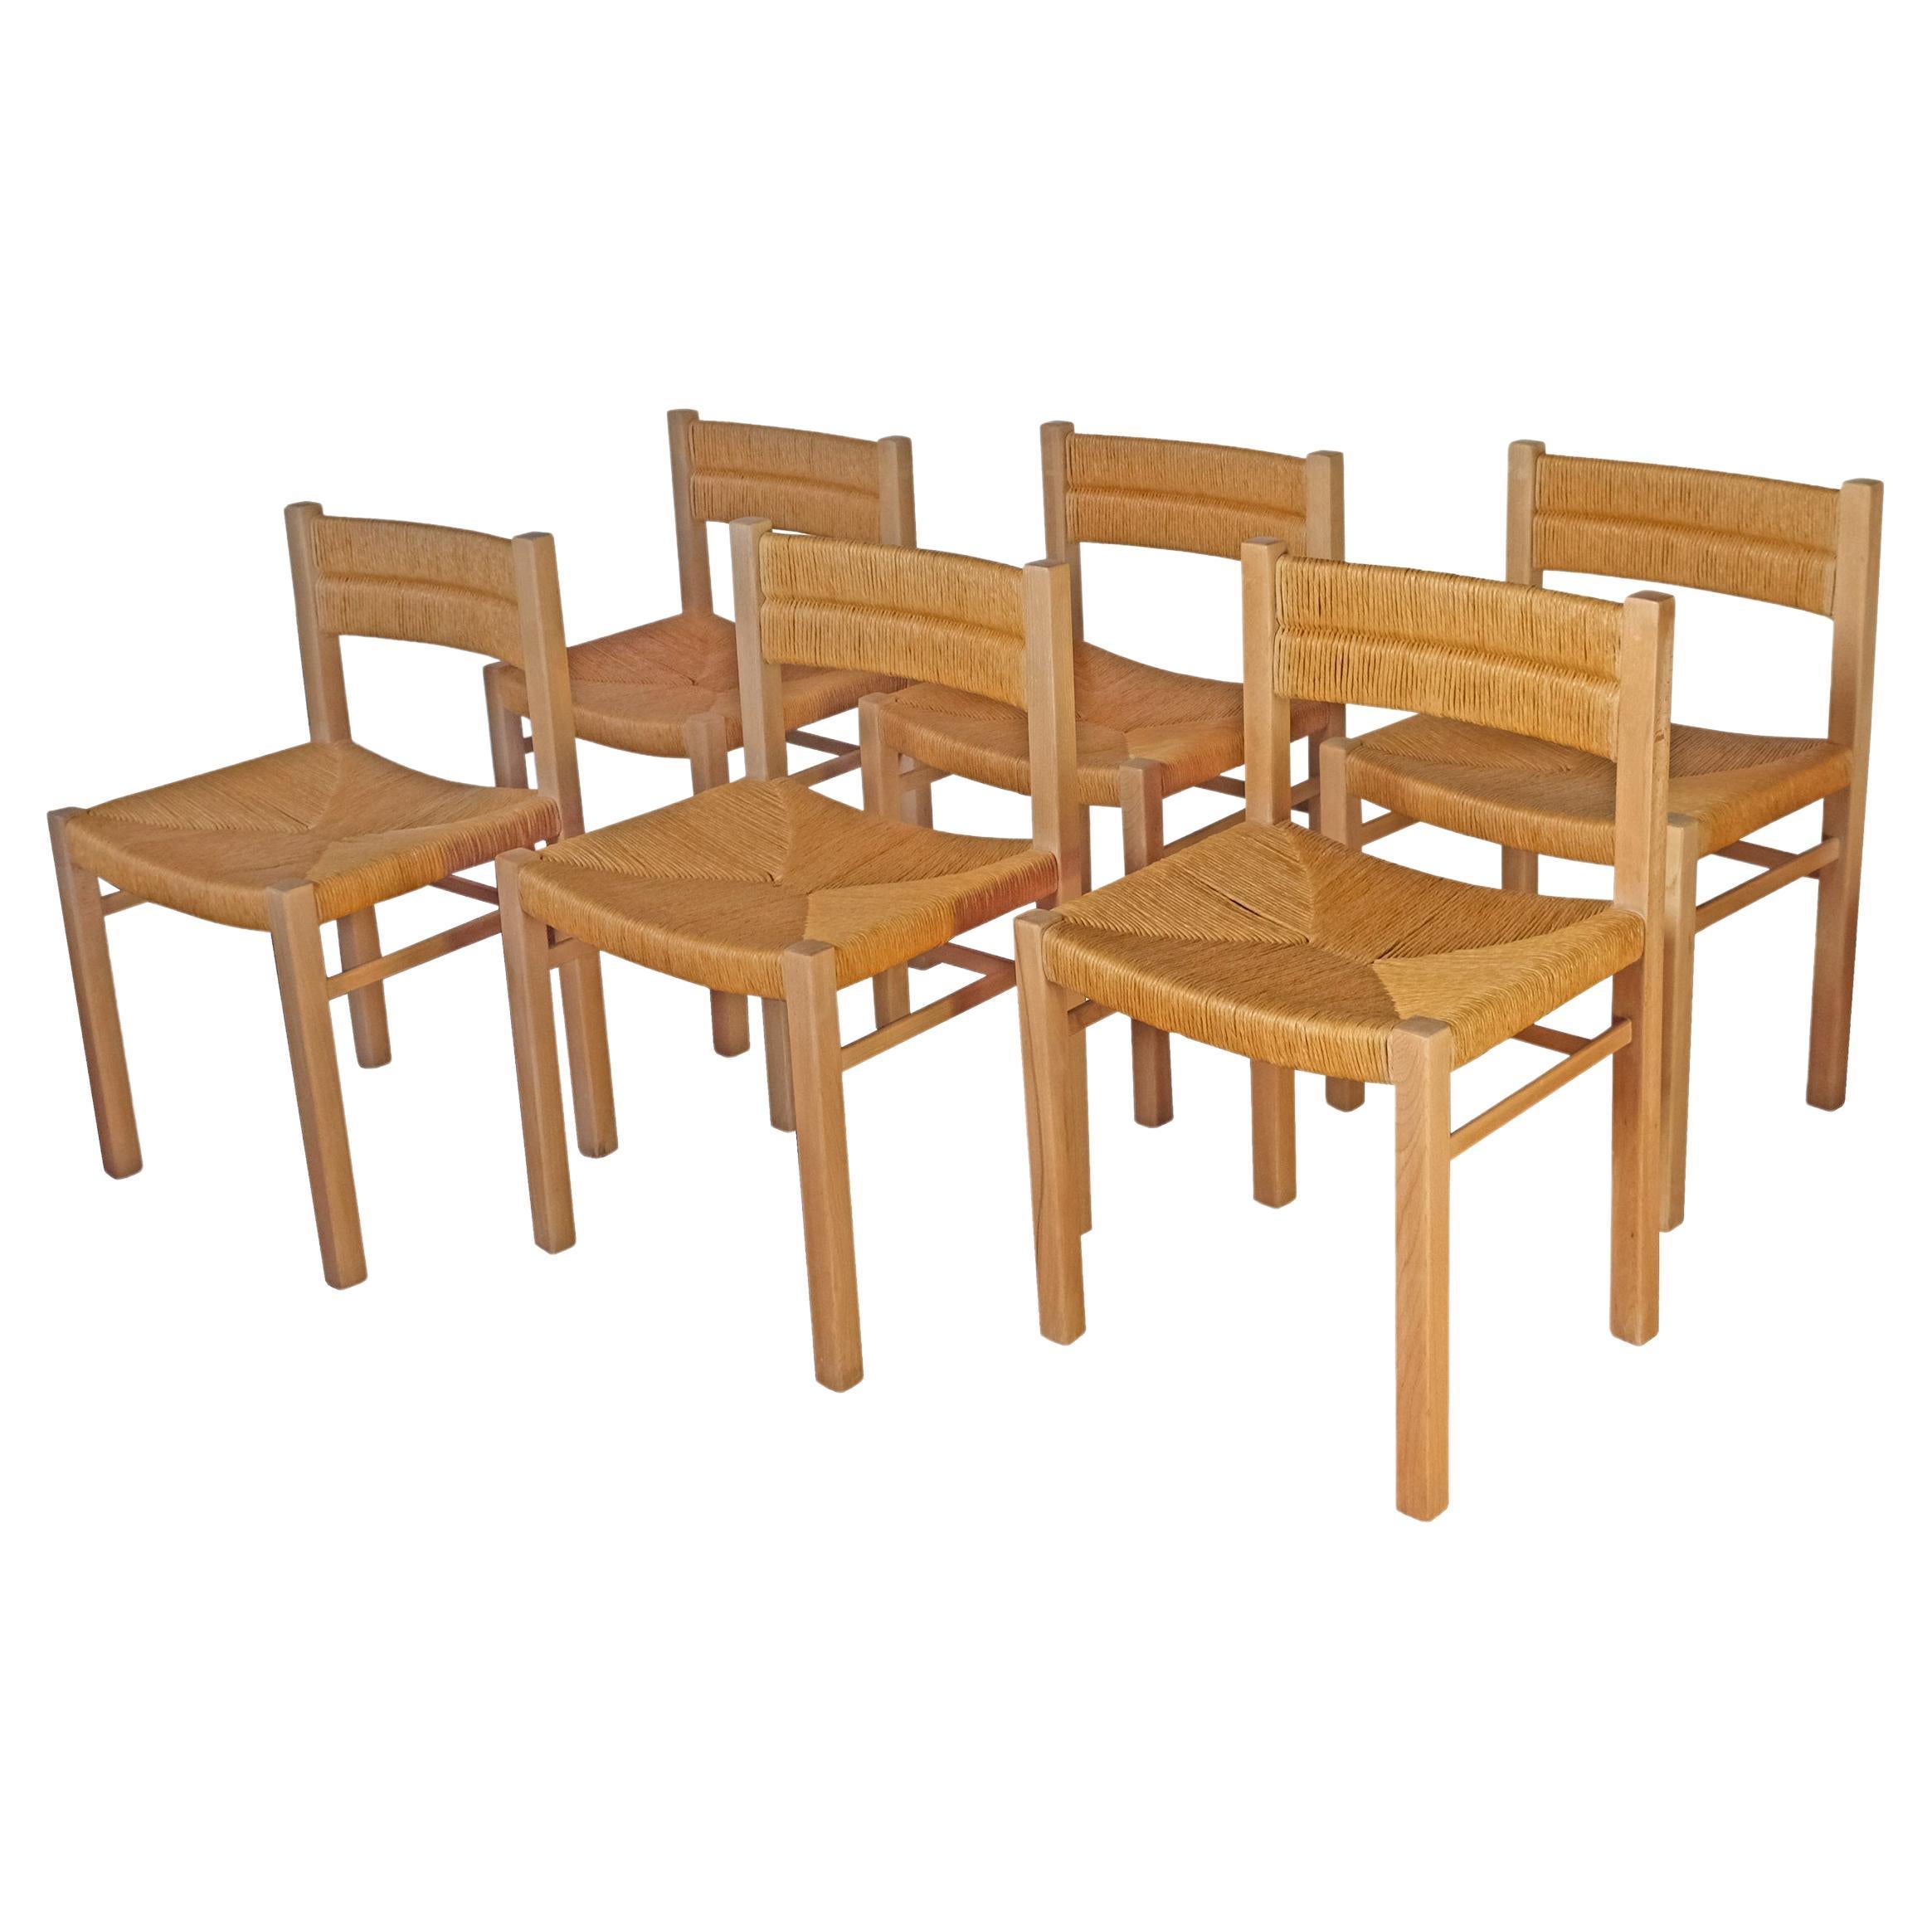 Pierre Gautier Delaye, Six "Week-End" Chairs, Vergnères, 1950s